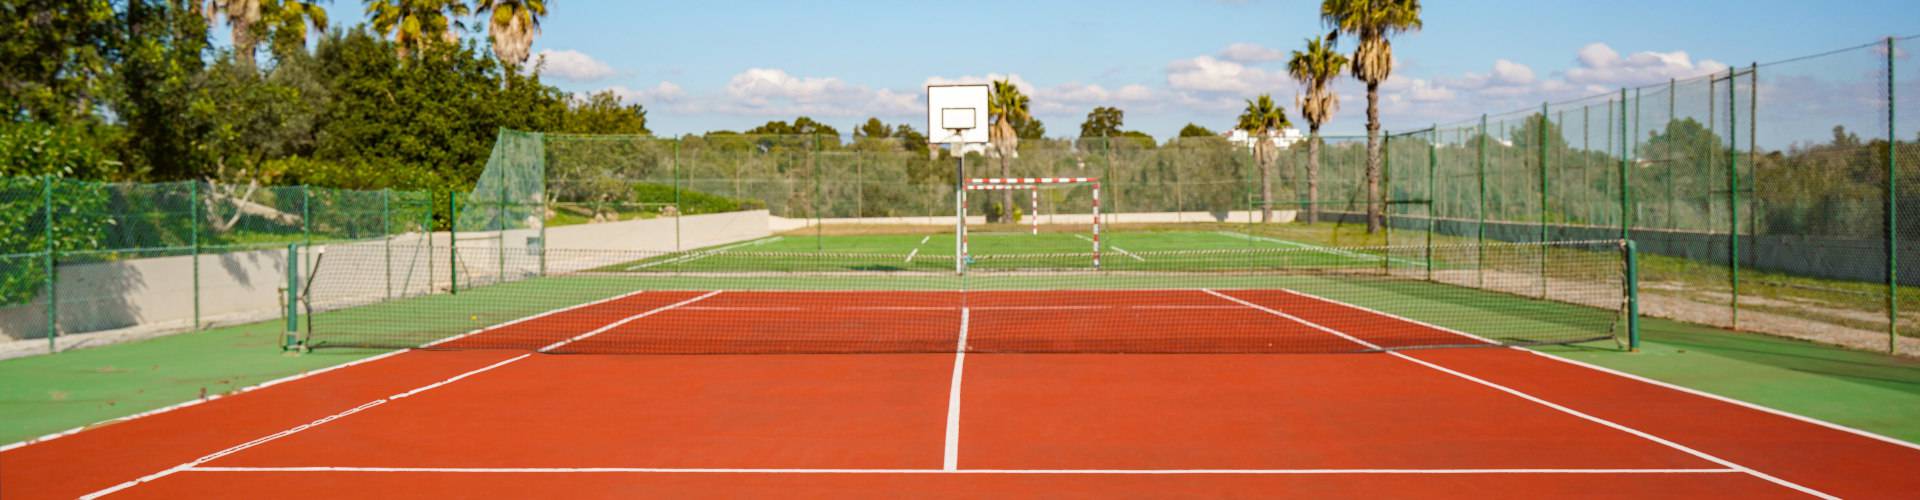 Vitors hotels - Alvor - Tennis Court Vitor's Plaza